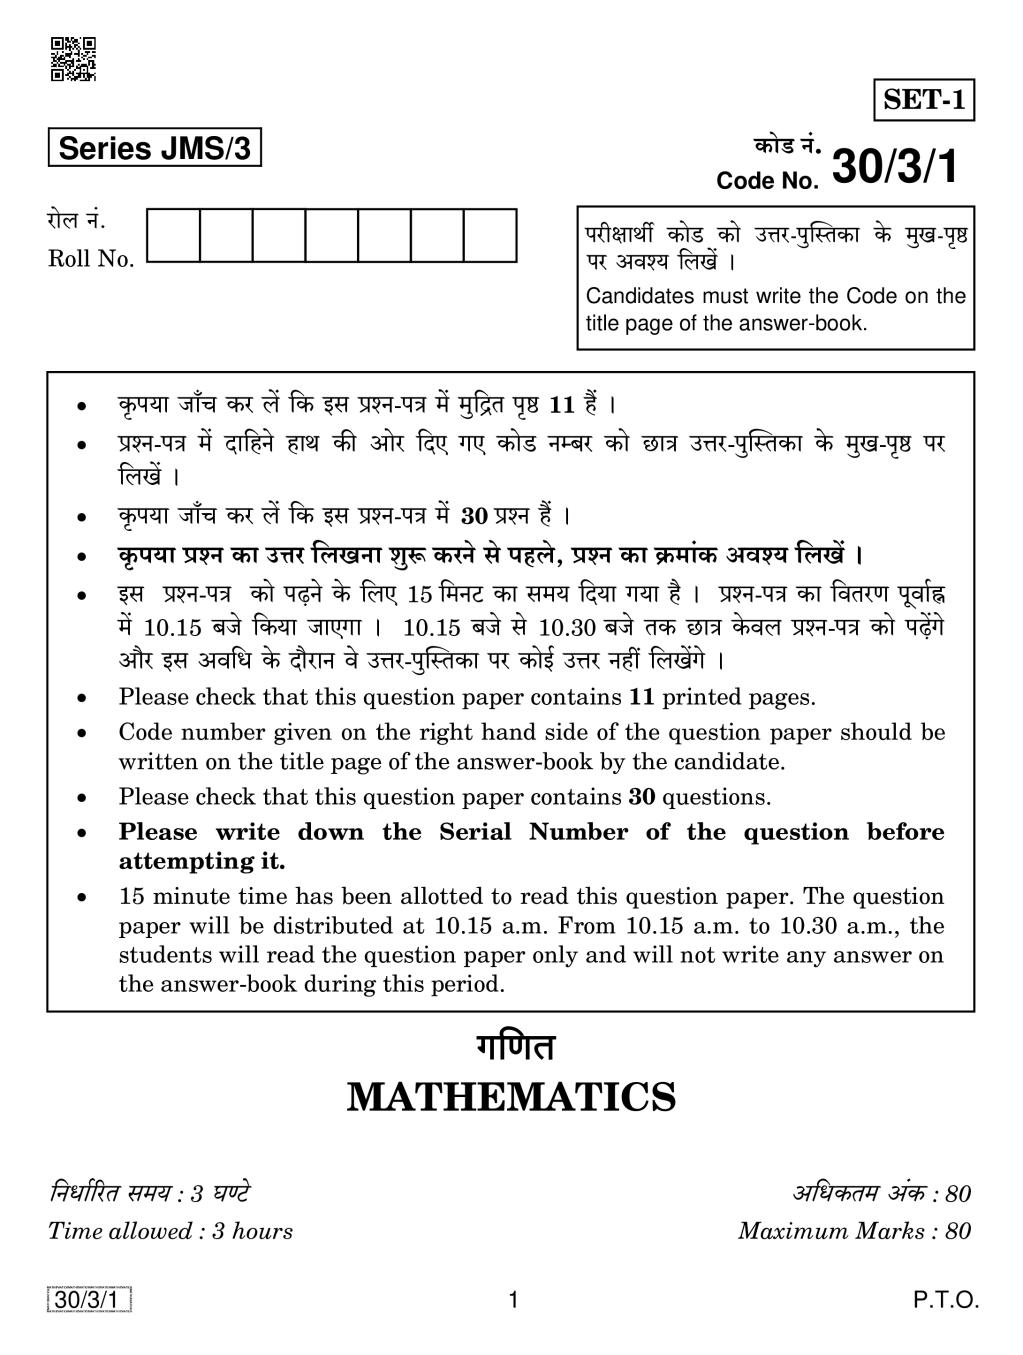 CBSE Class 10 Mathematics Question Paper 2019 Set 3 - Page 1